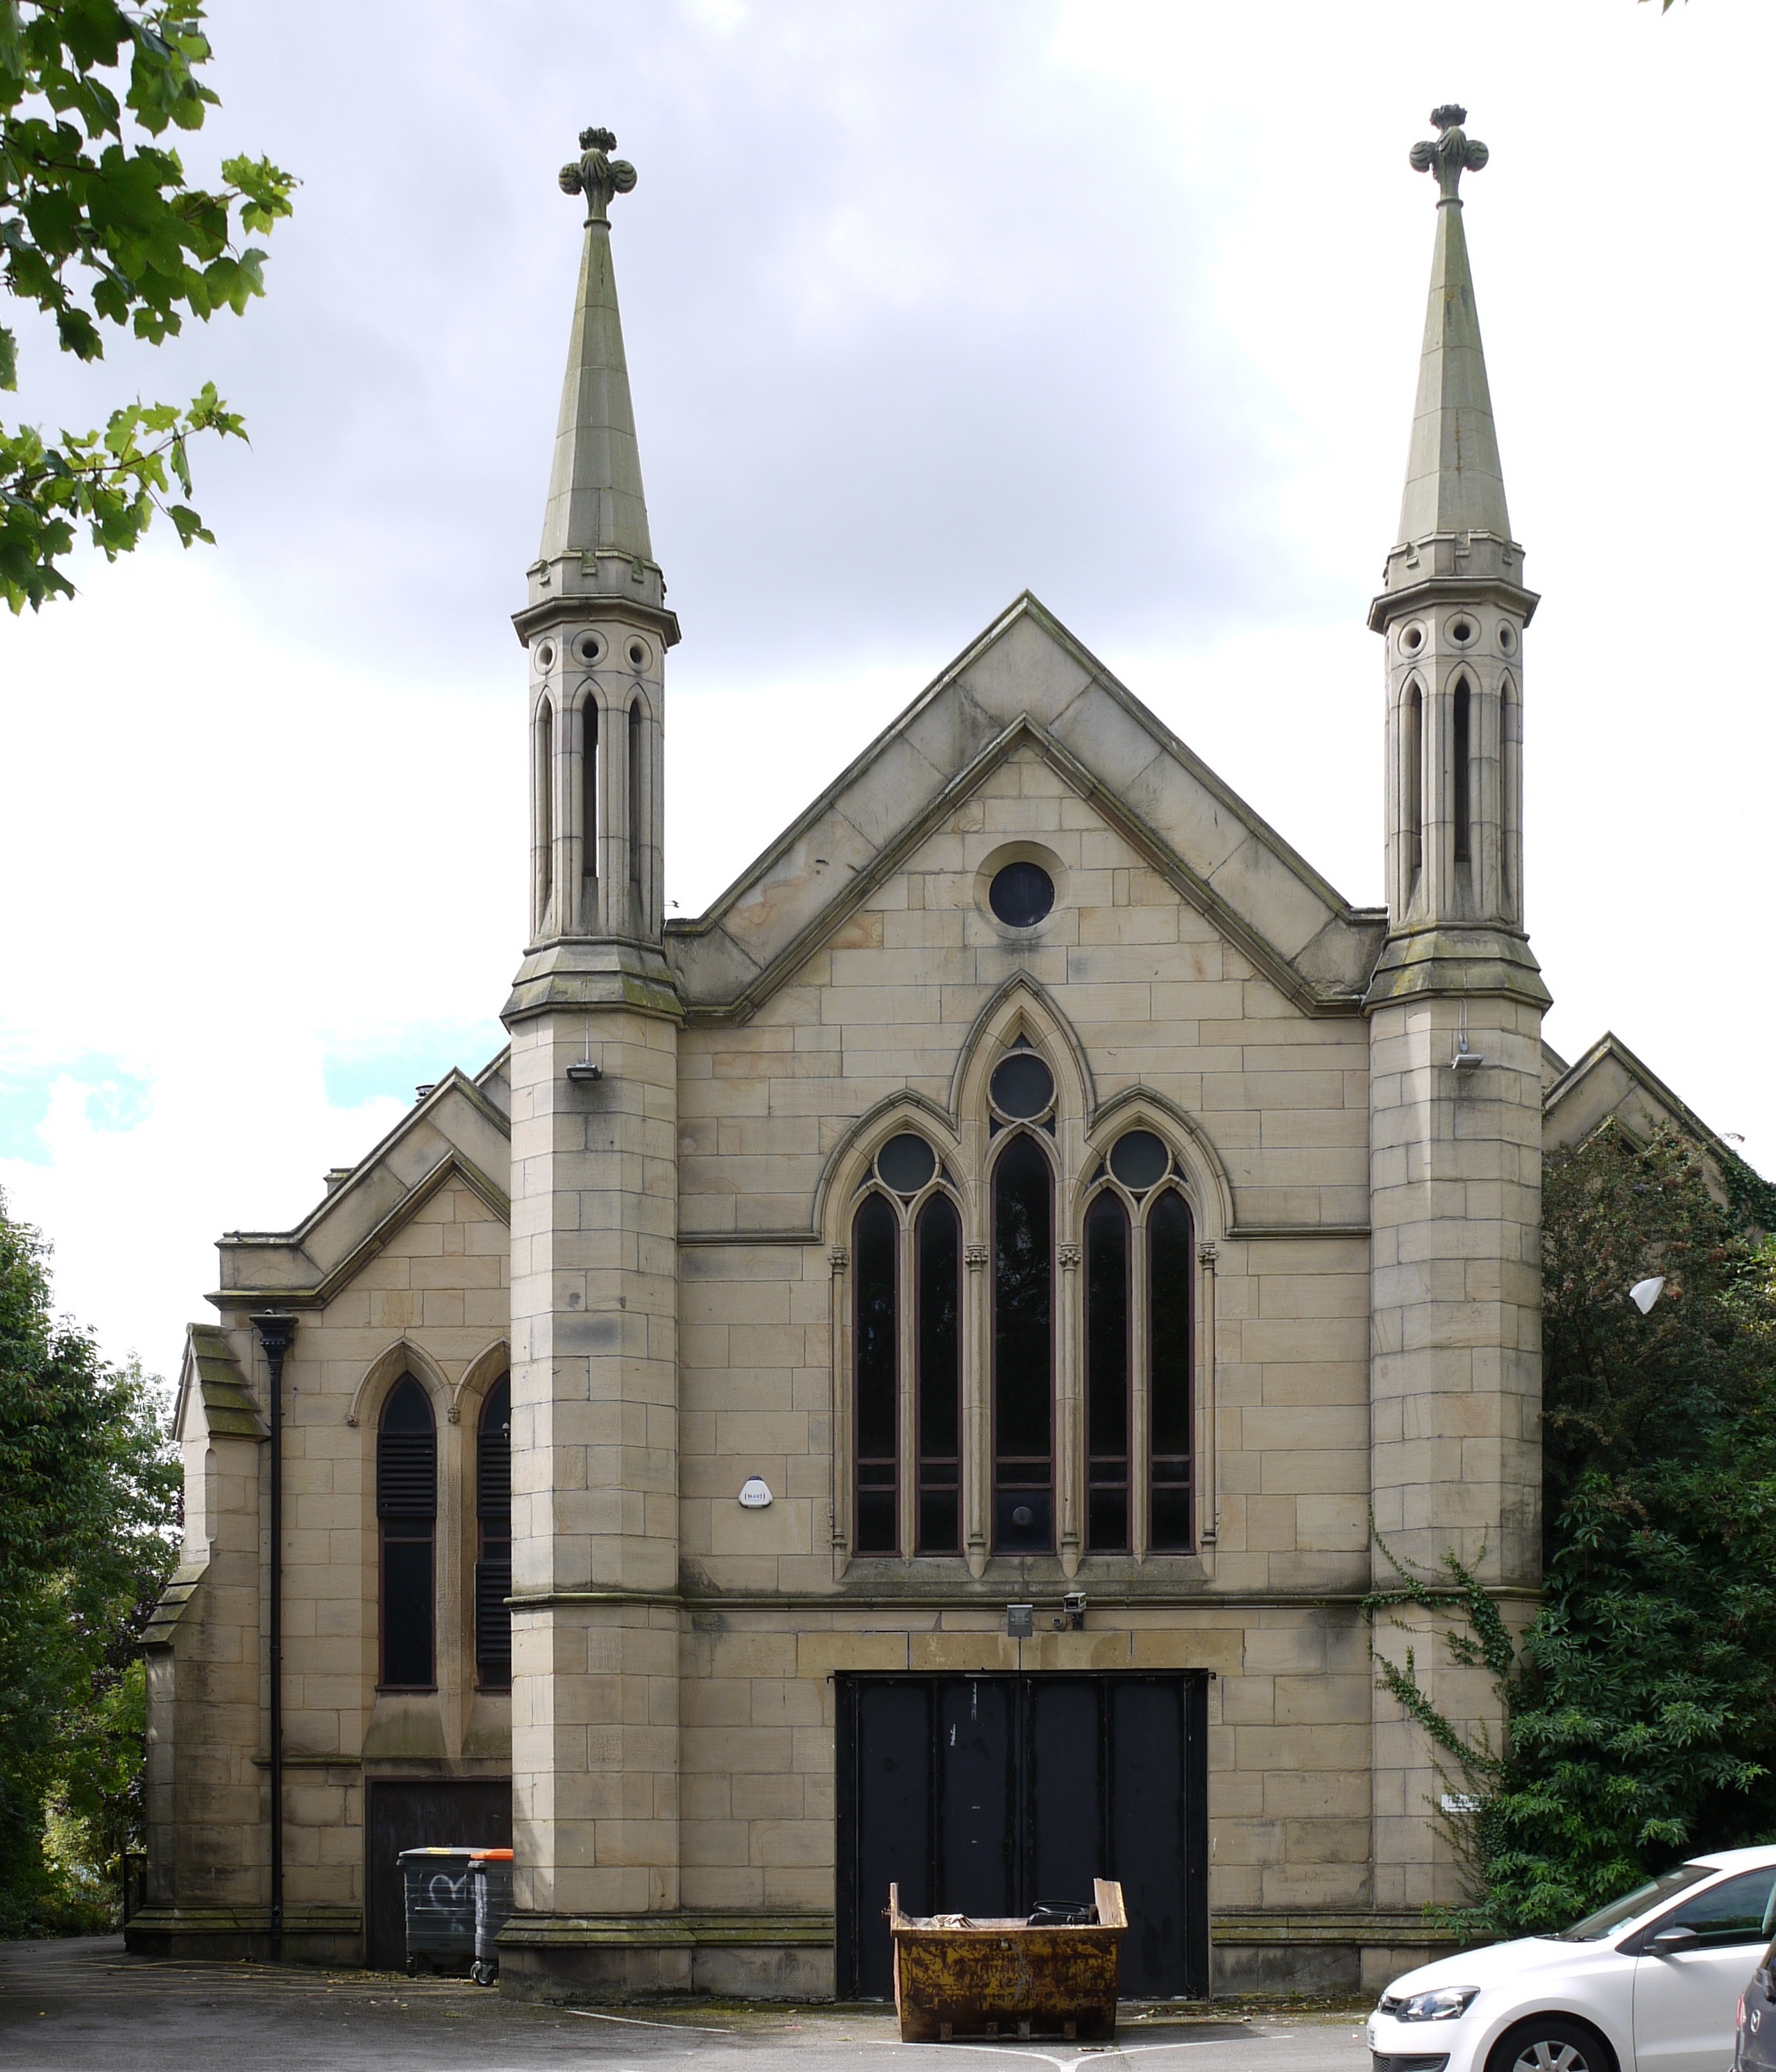 St Paul's Church, Preston, Lancashire